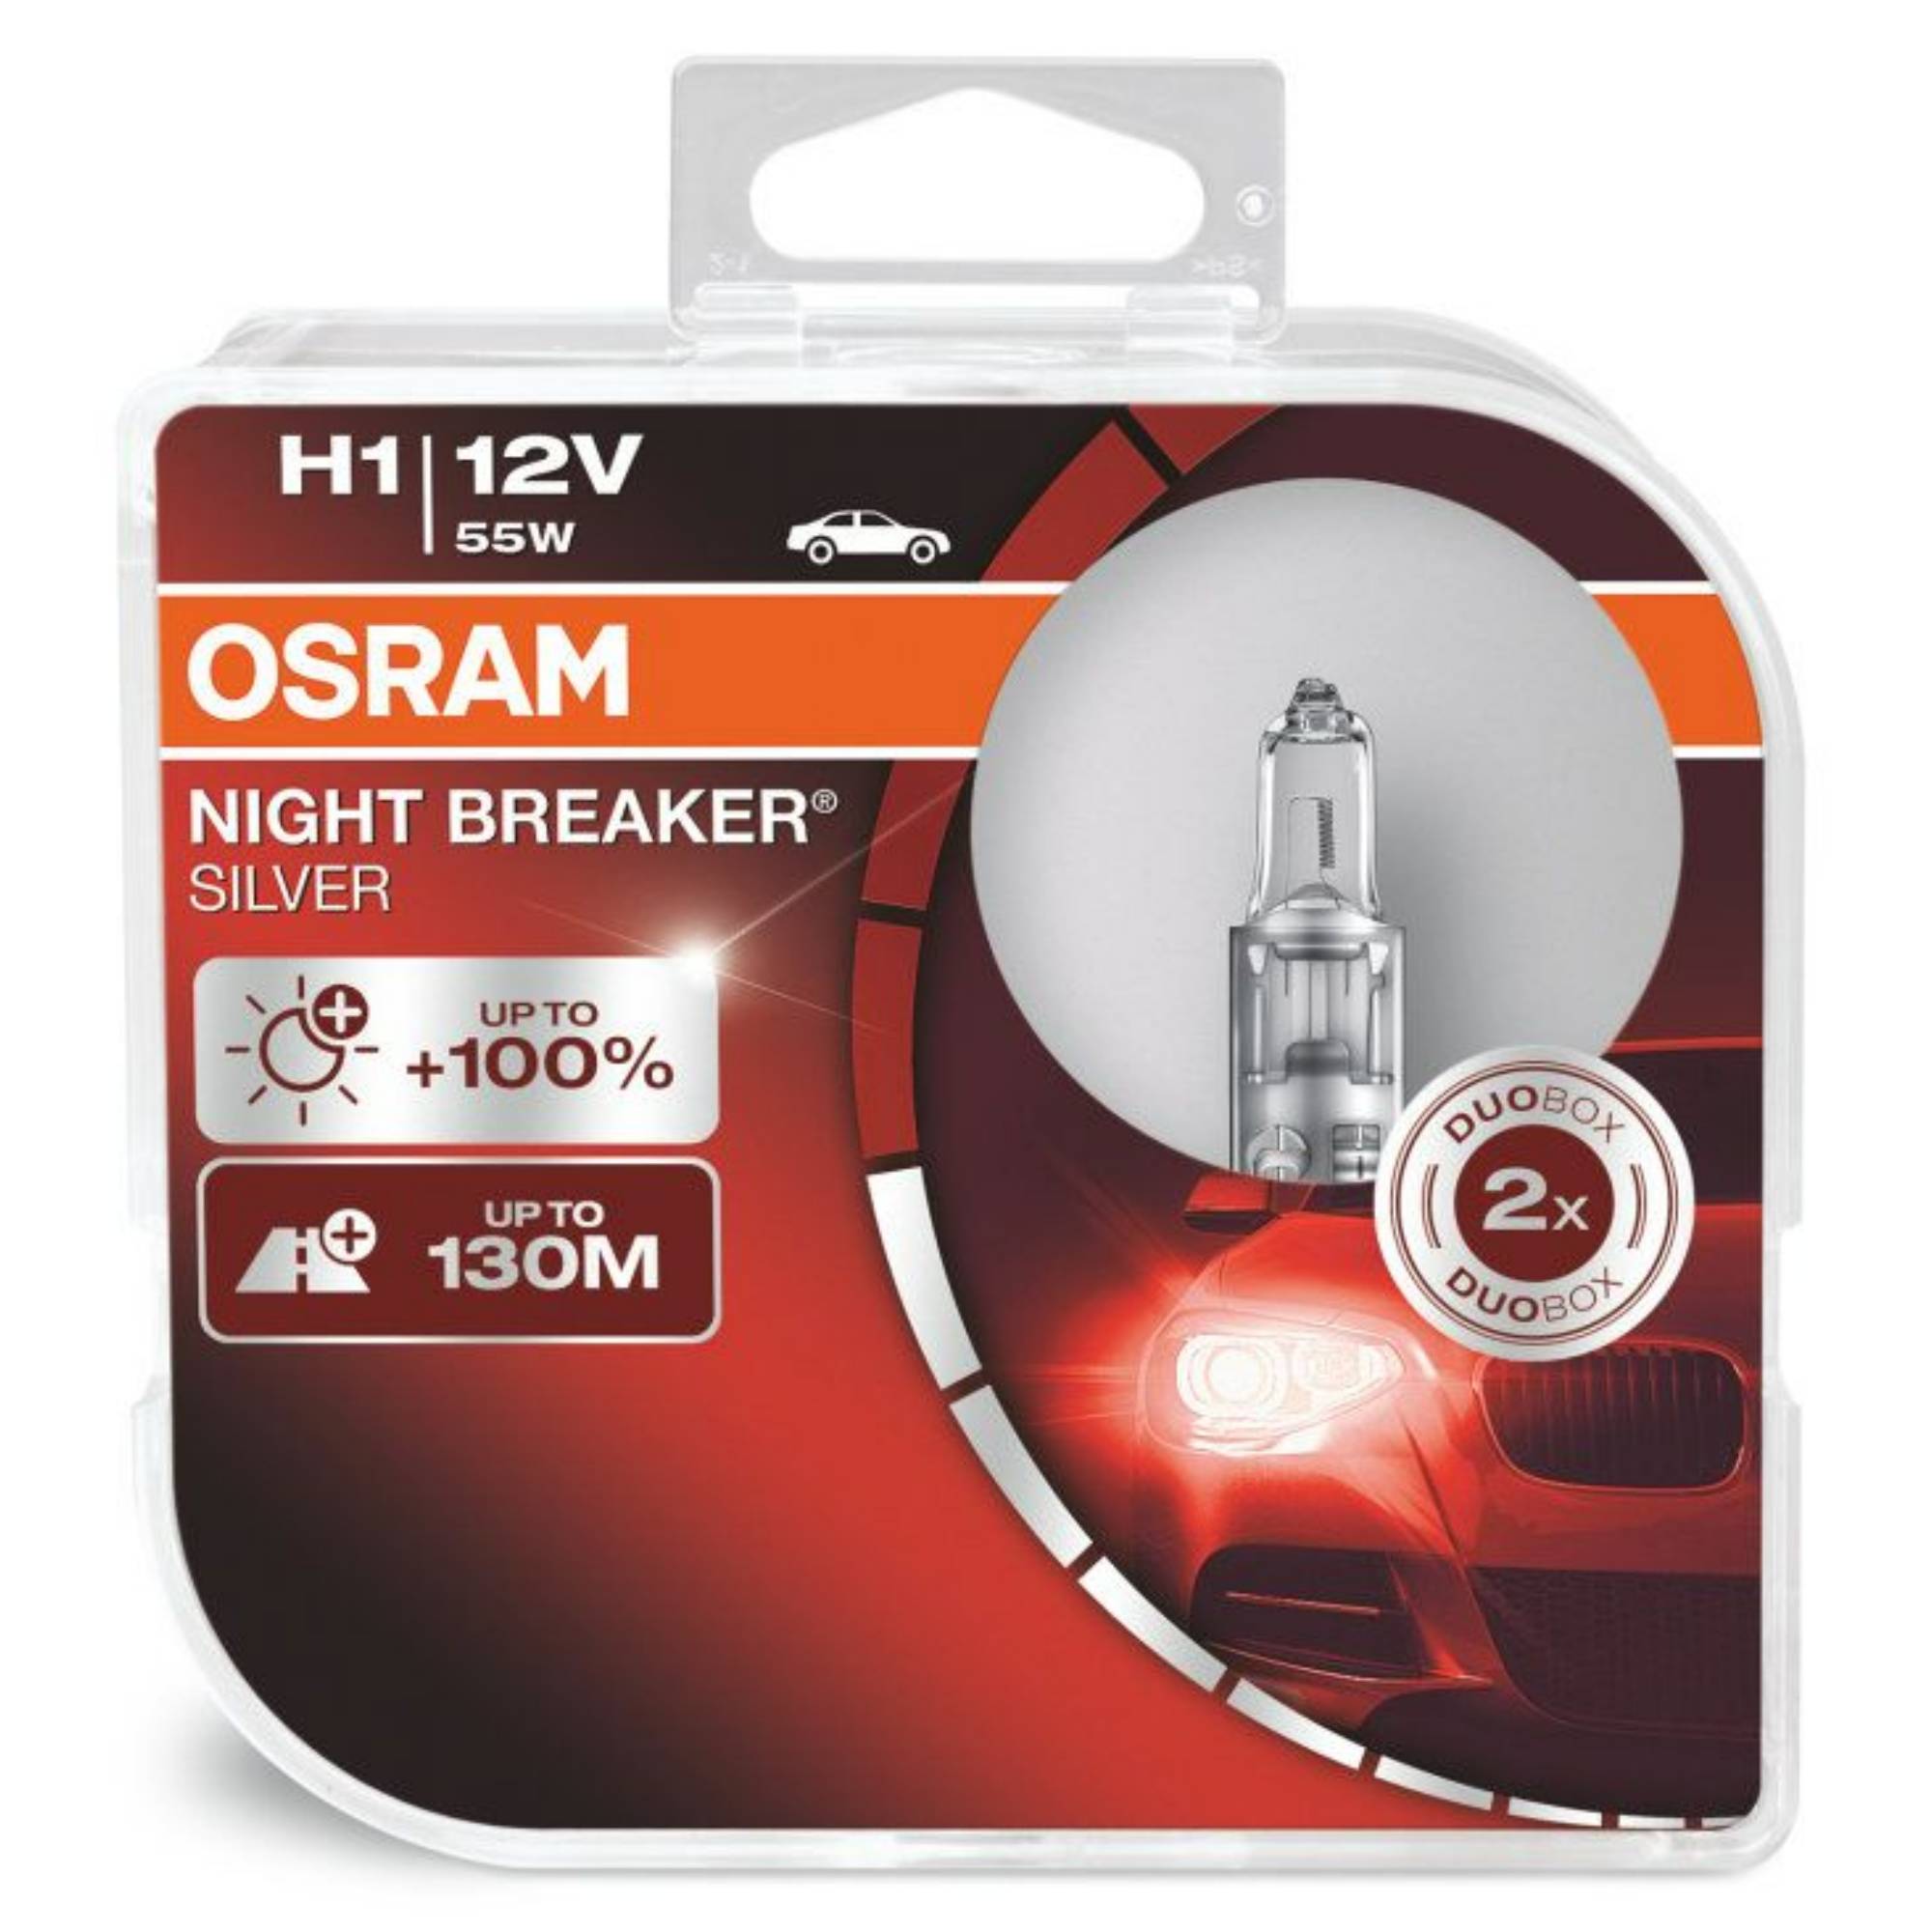 OSRAM H1 NIGHT BREAKER SILVER 12V 55W Bulbs Twin Pack